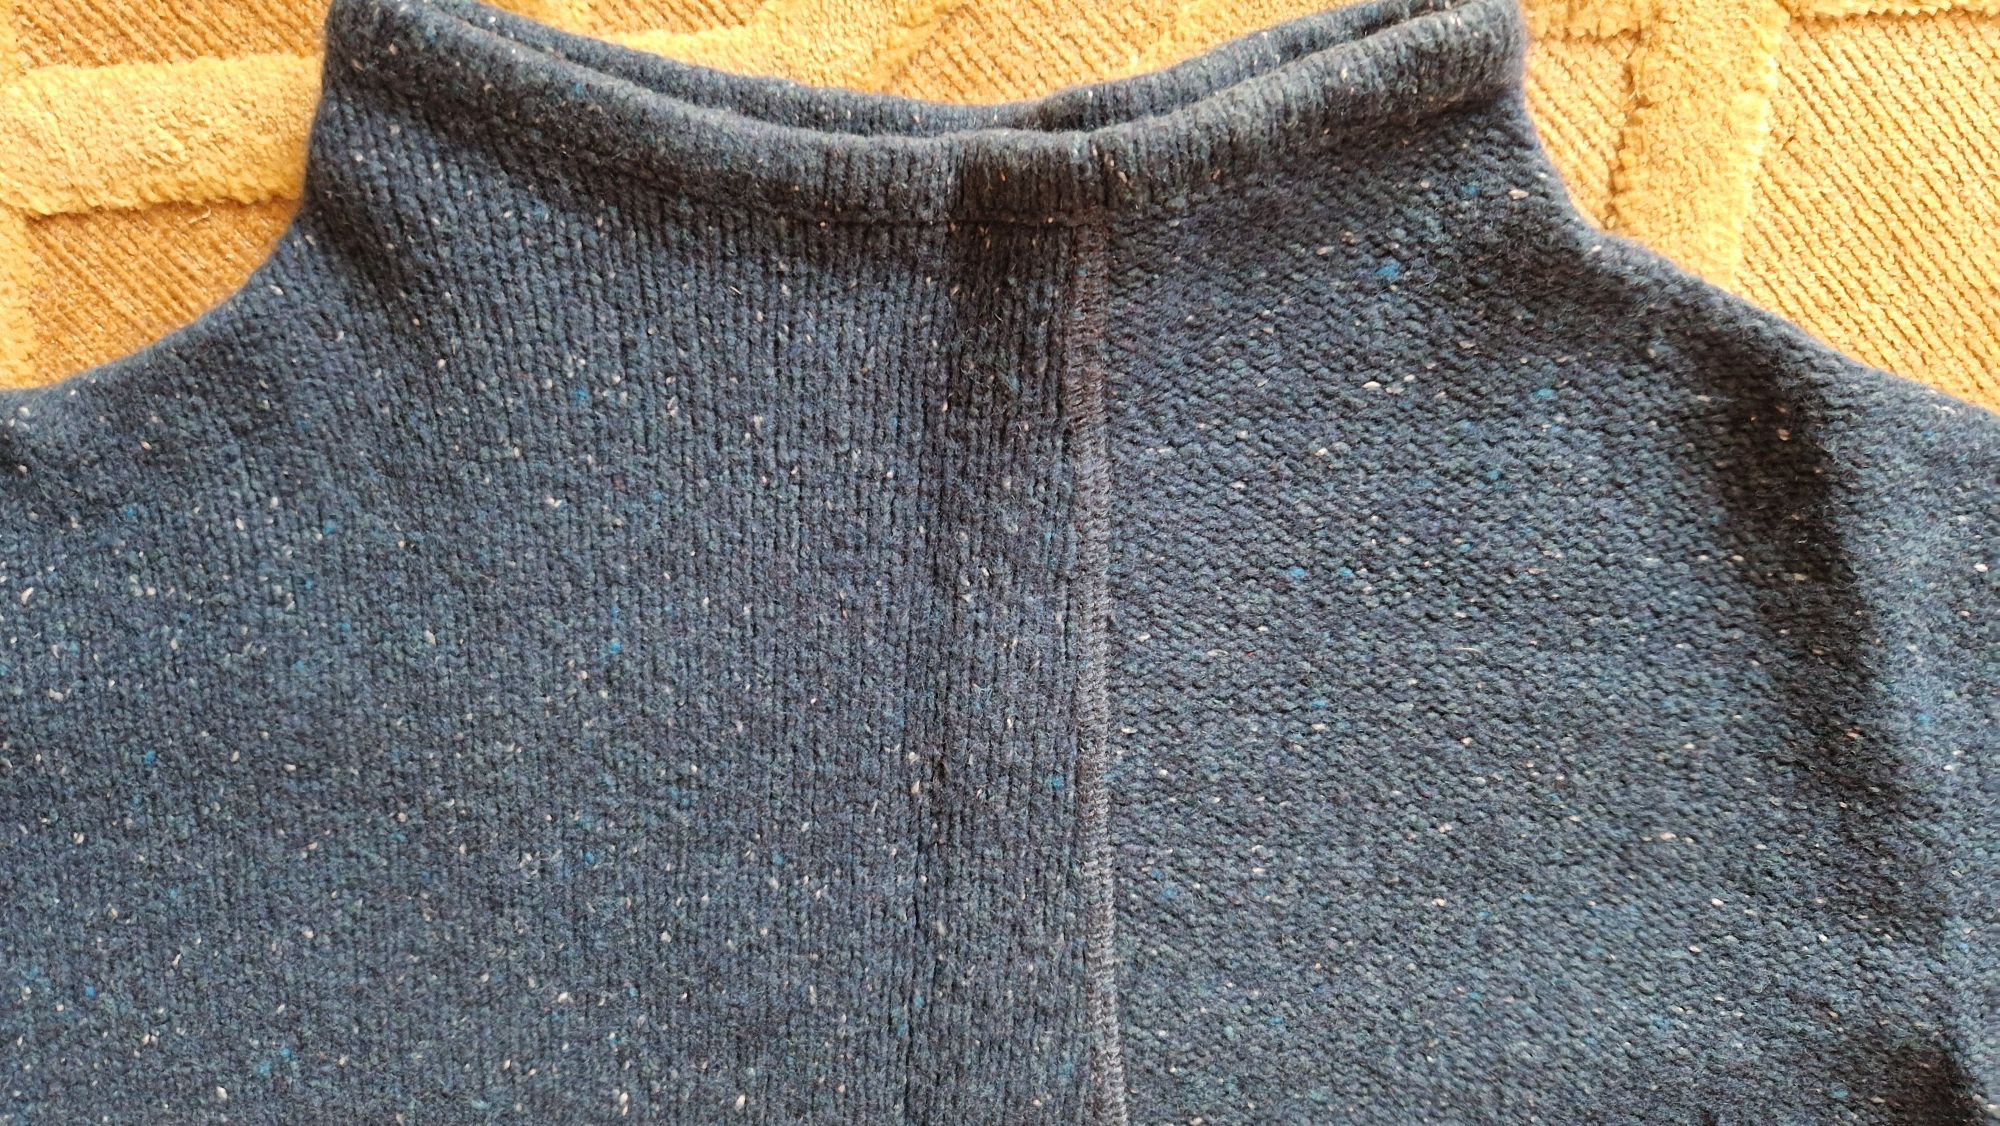 Wełniany sweter Levis